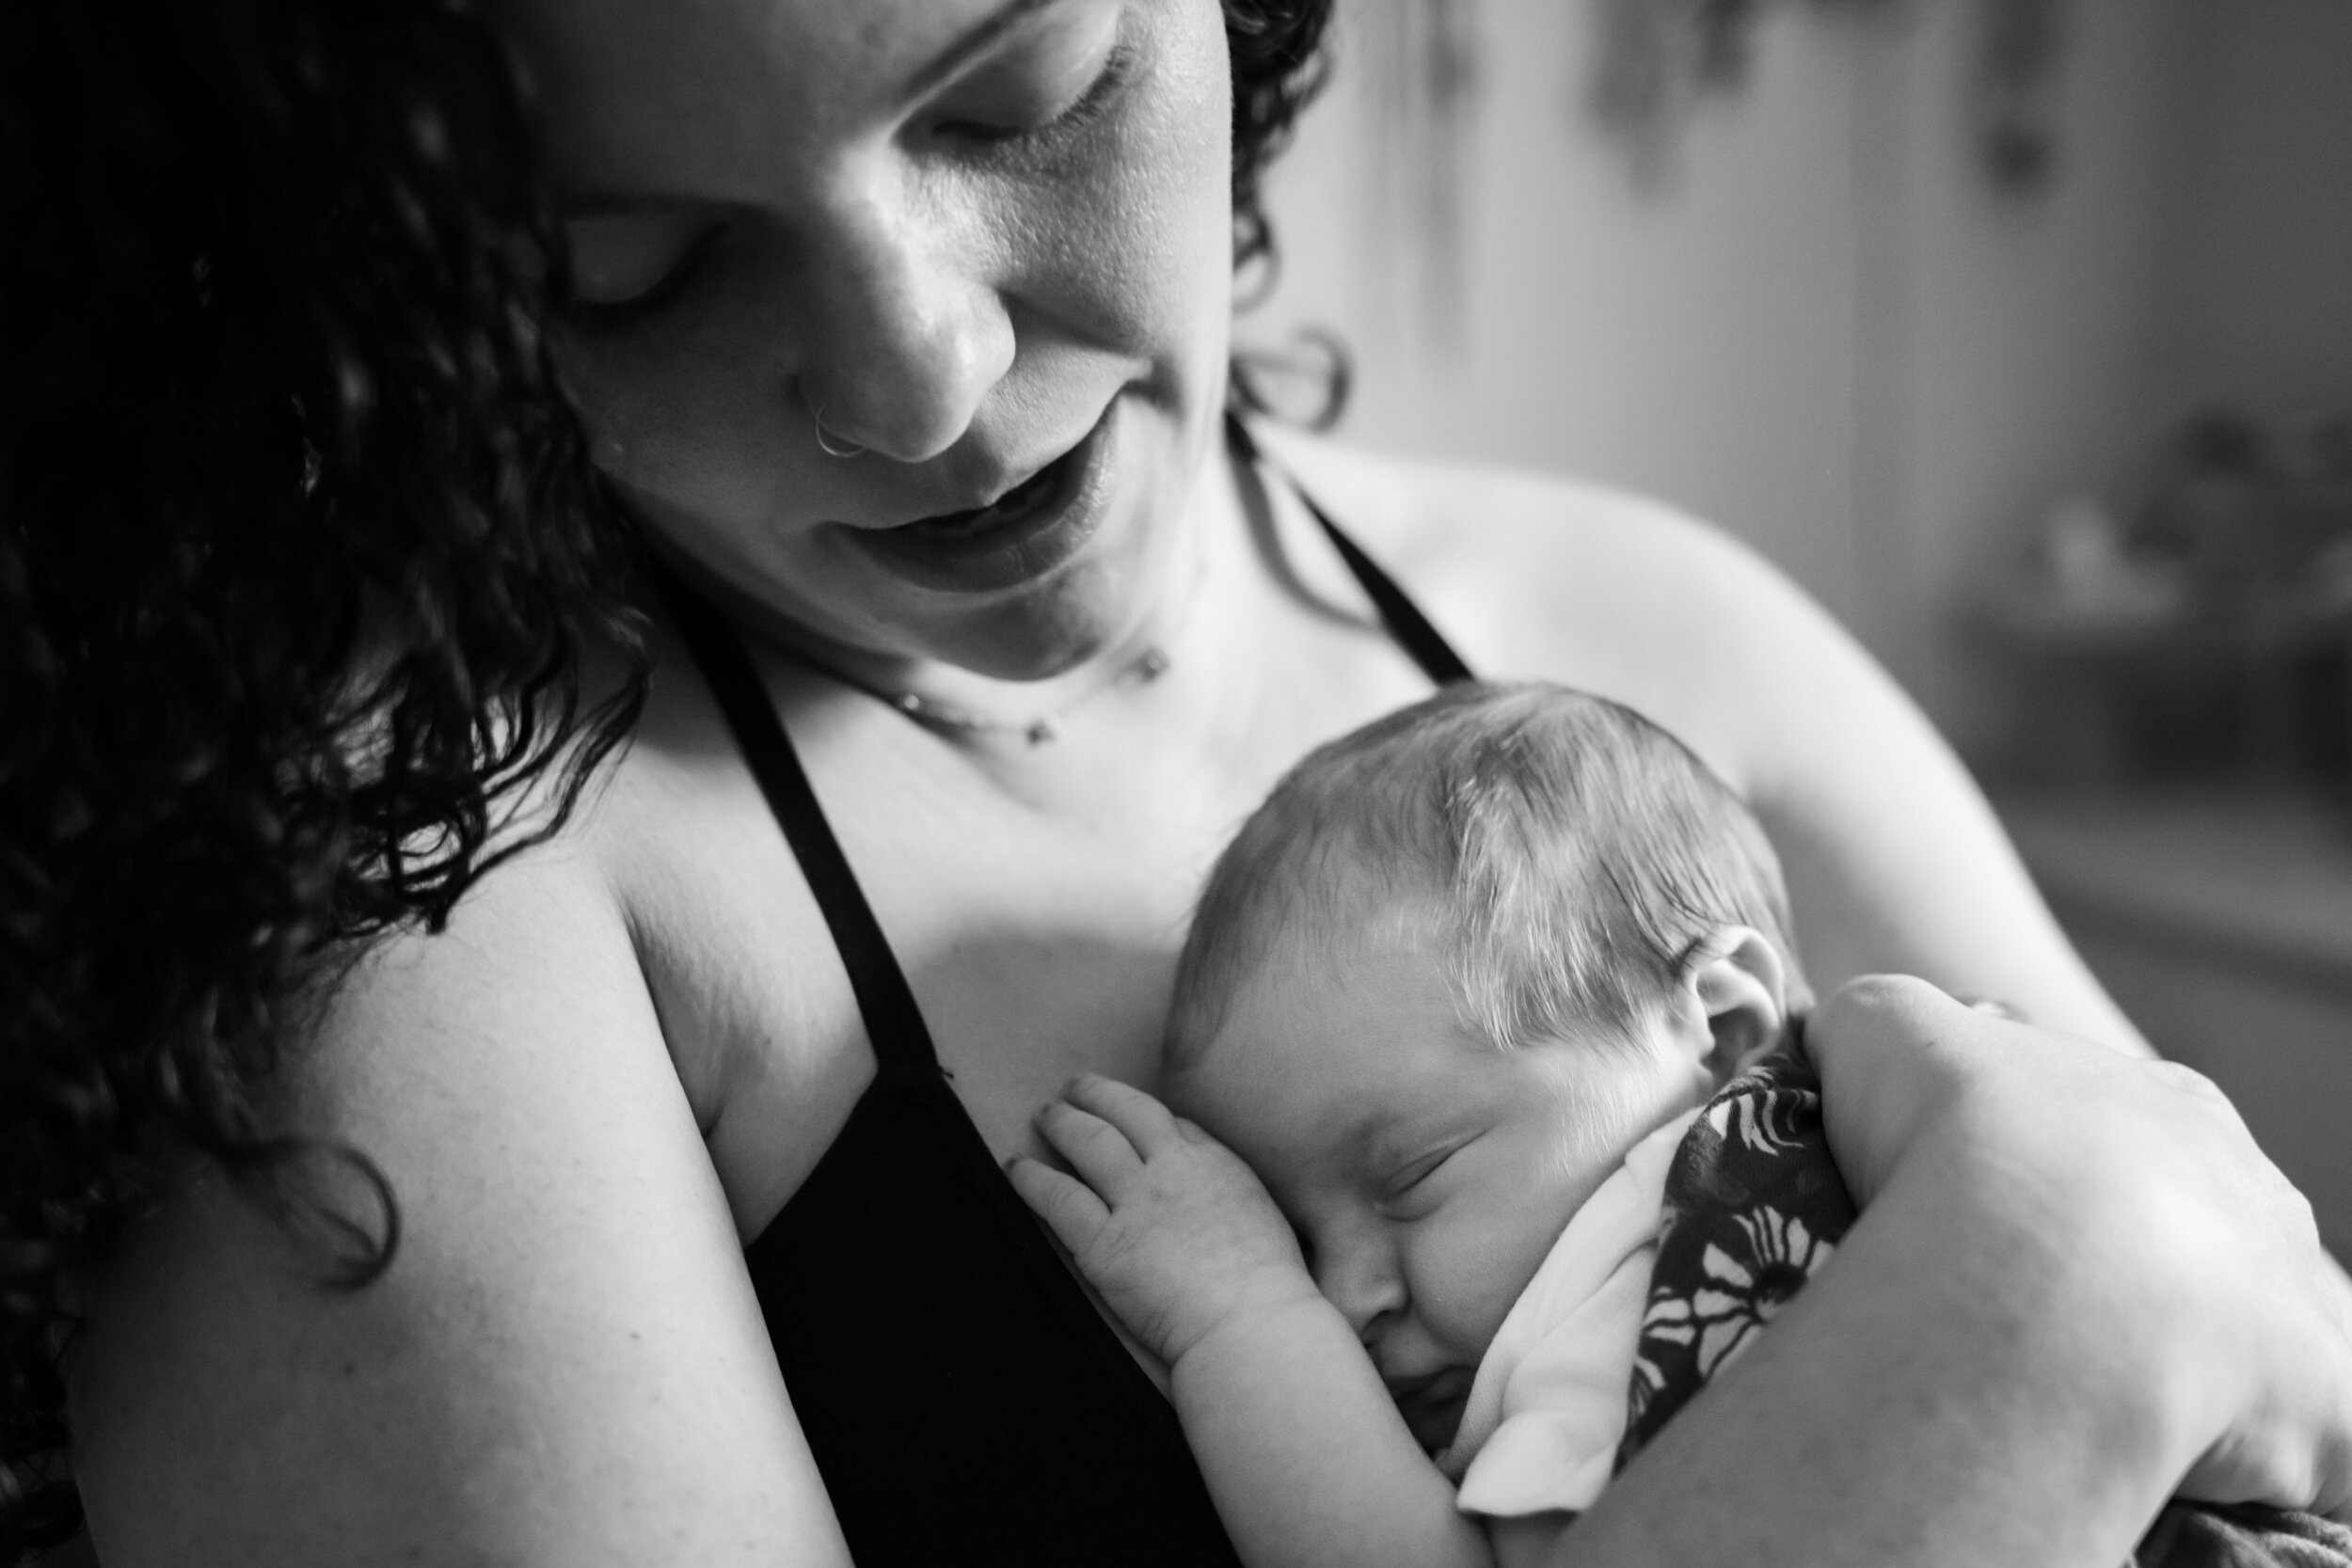 jacksonville mom holding and admiring her newborn baby girl